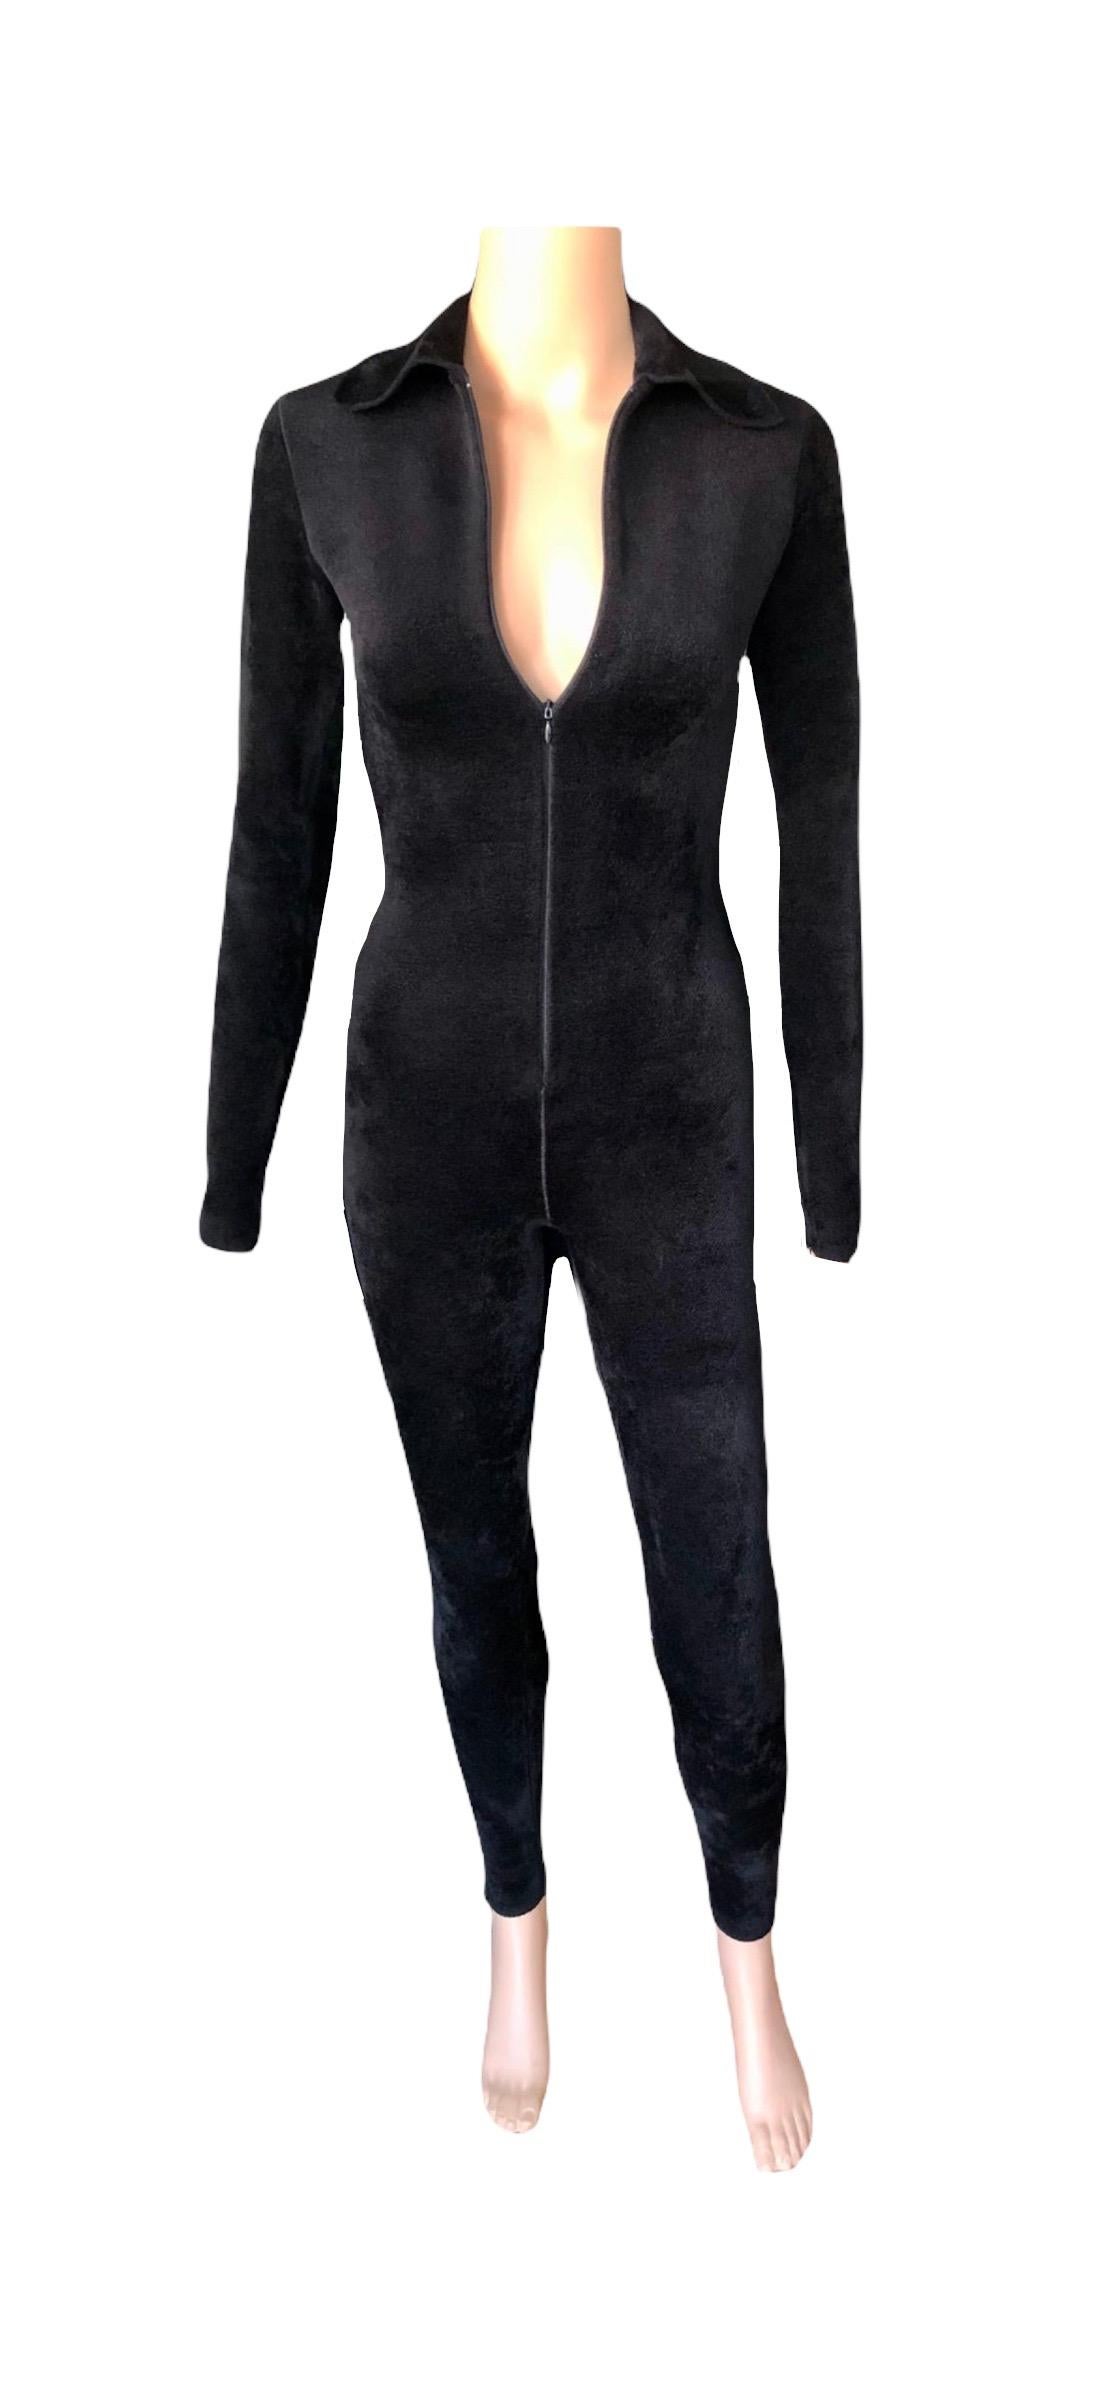 Black New Azzedine Alaia Chenille Bodycon Playsuit Catsuit Jumpsuit 